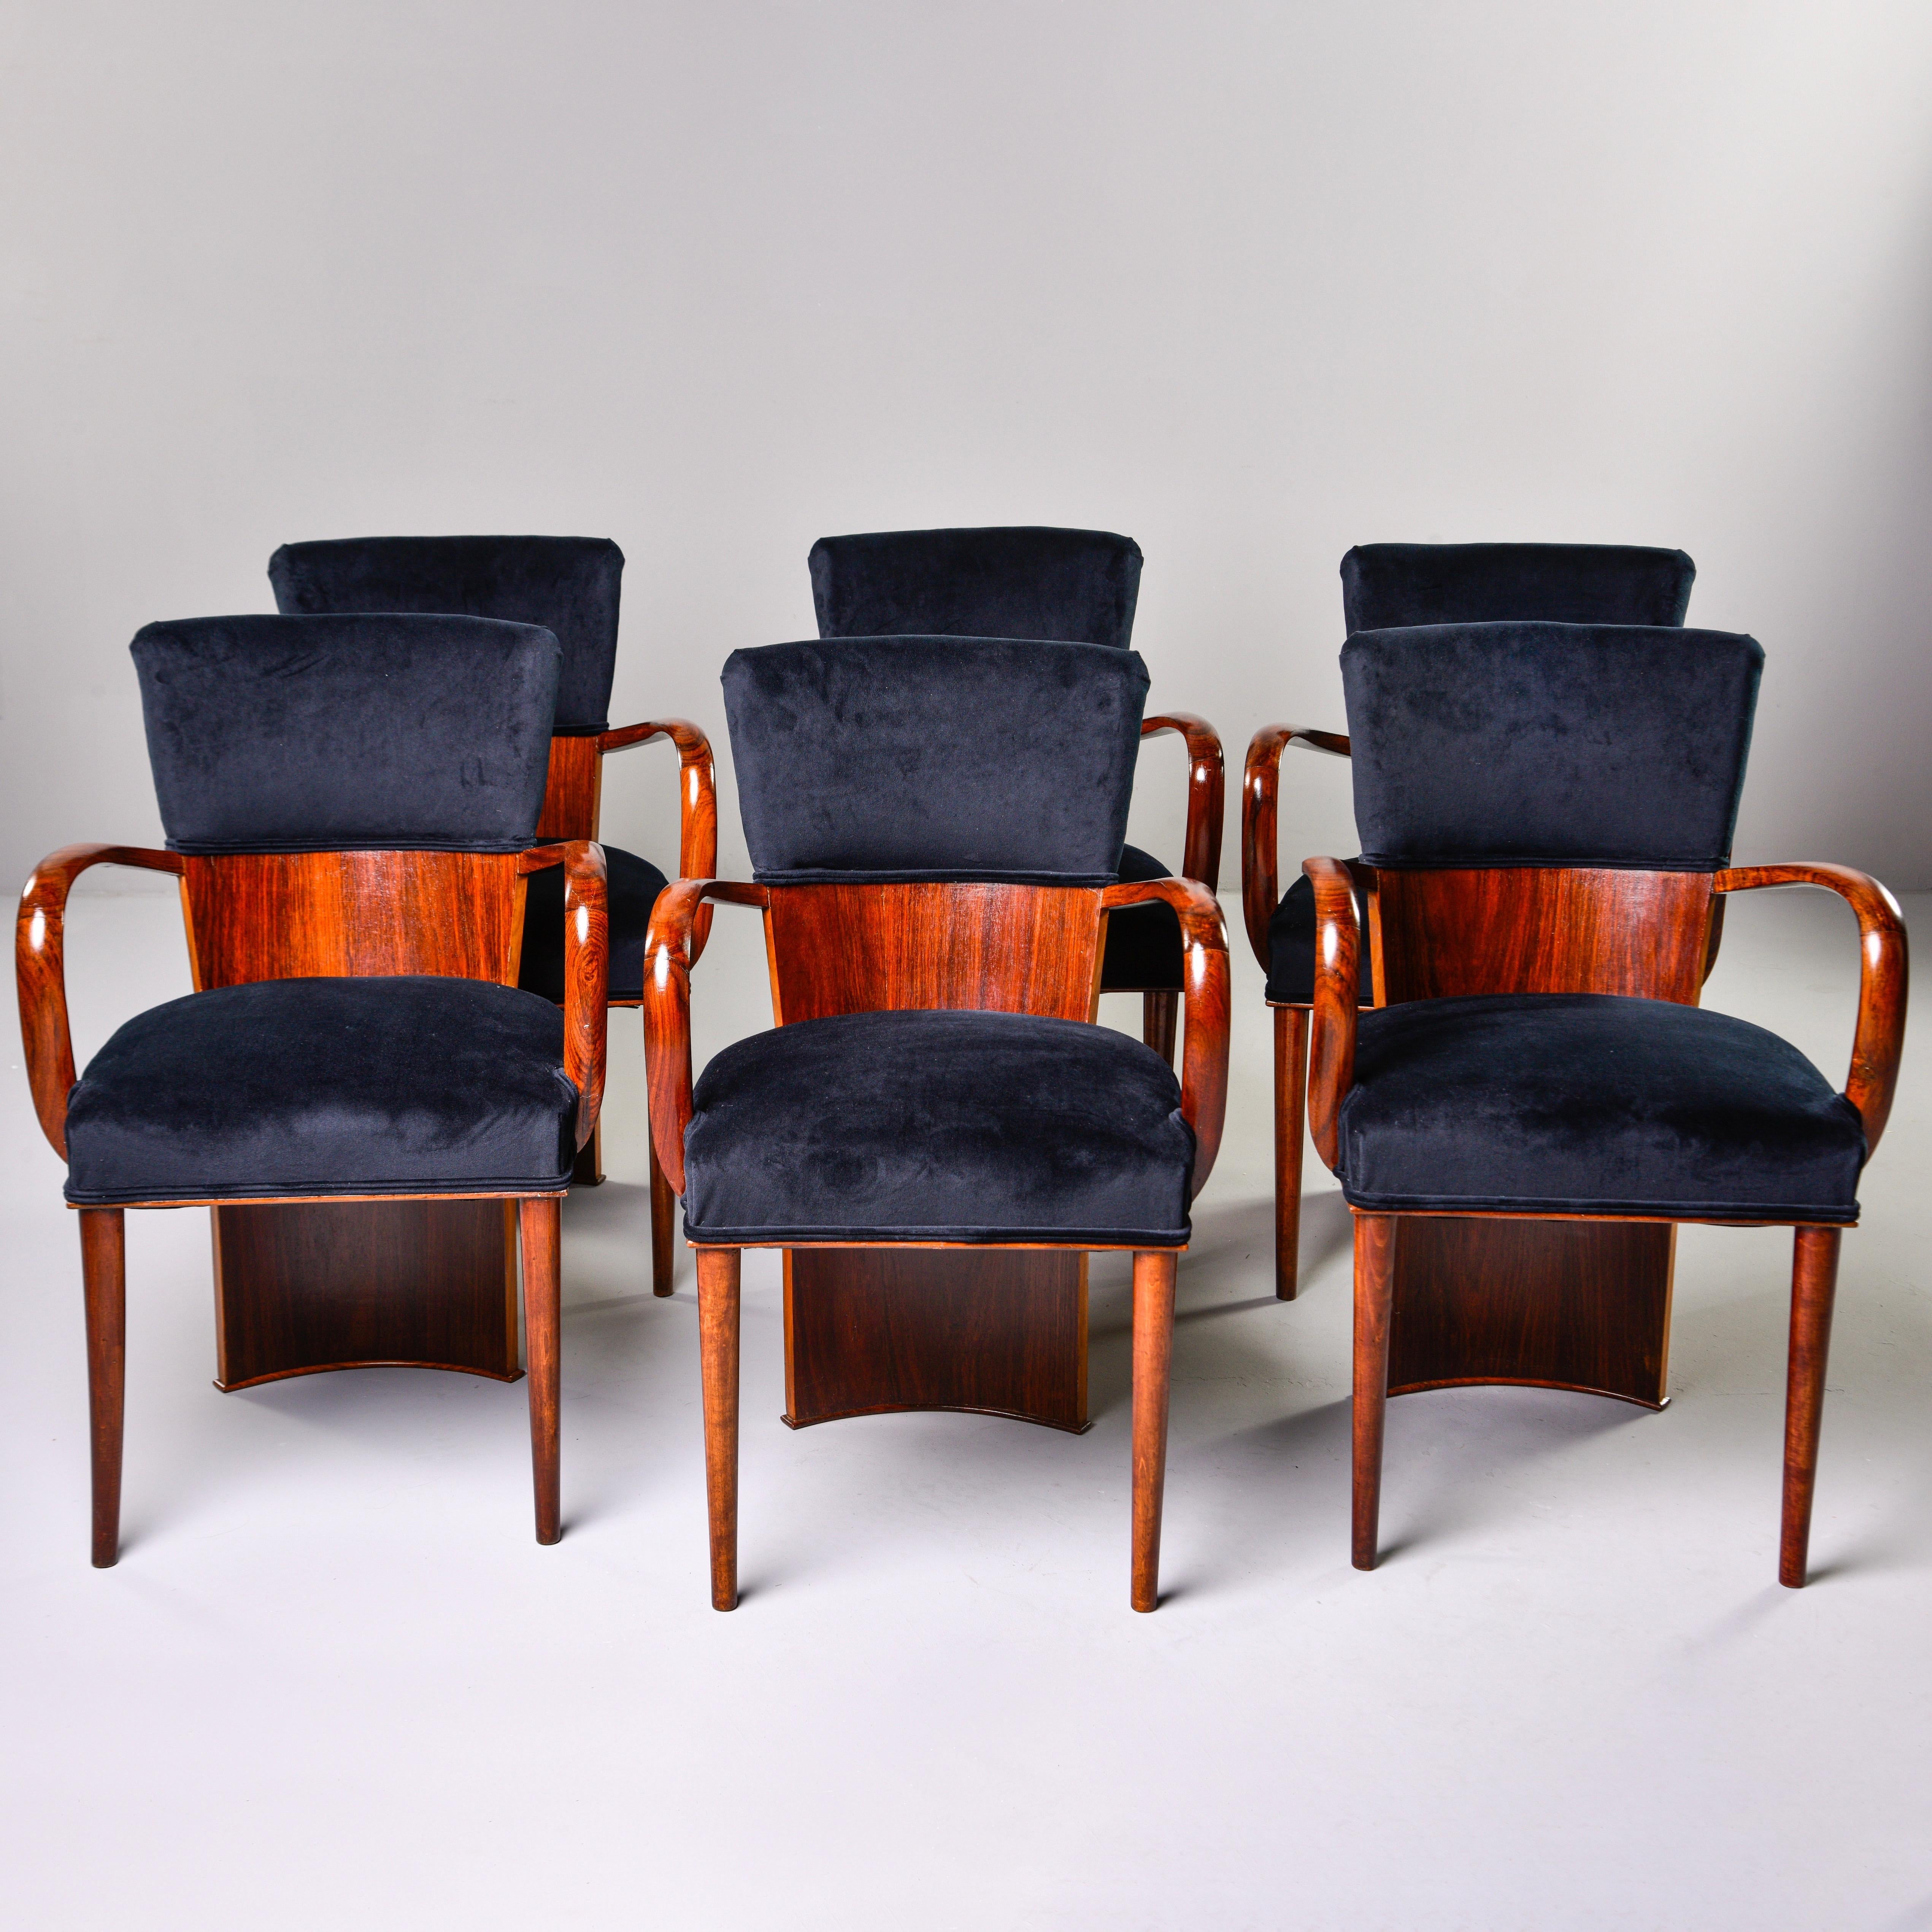 Italian Set of Six Art Deco Amboyna Wood Chairs with Black Velvet Upholstery